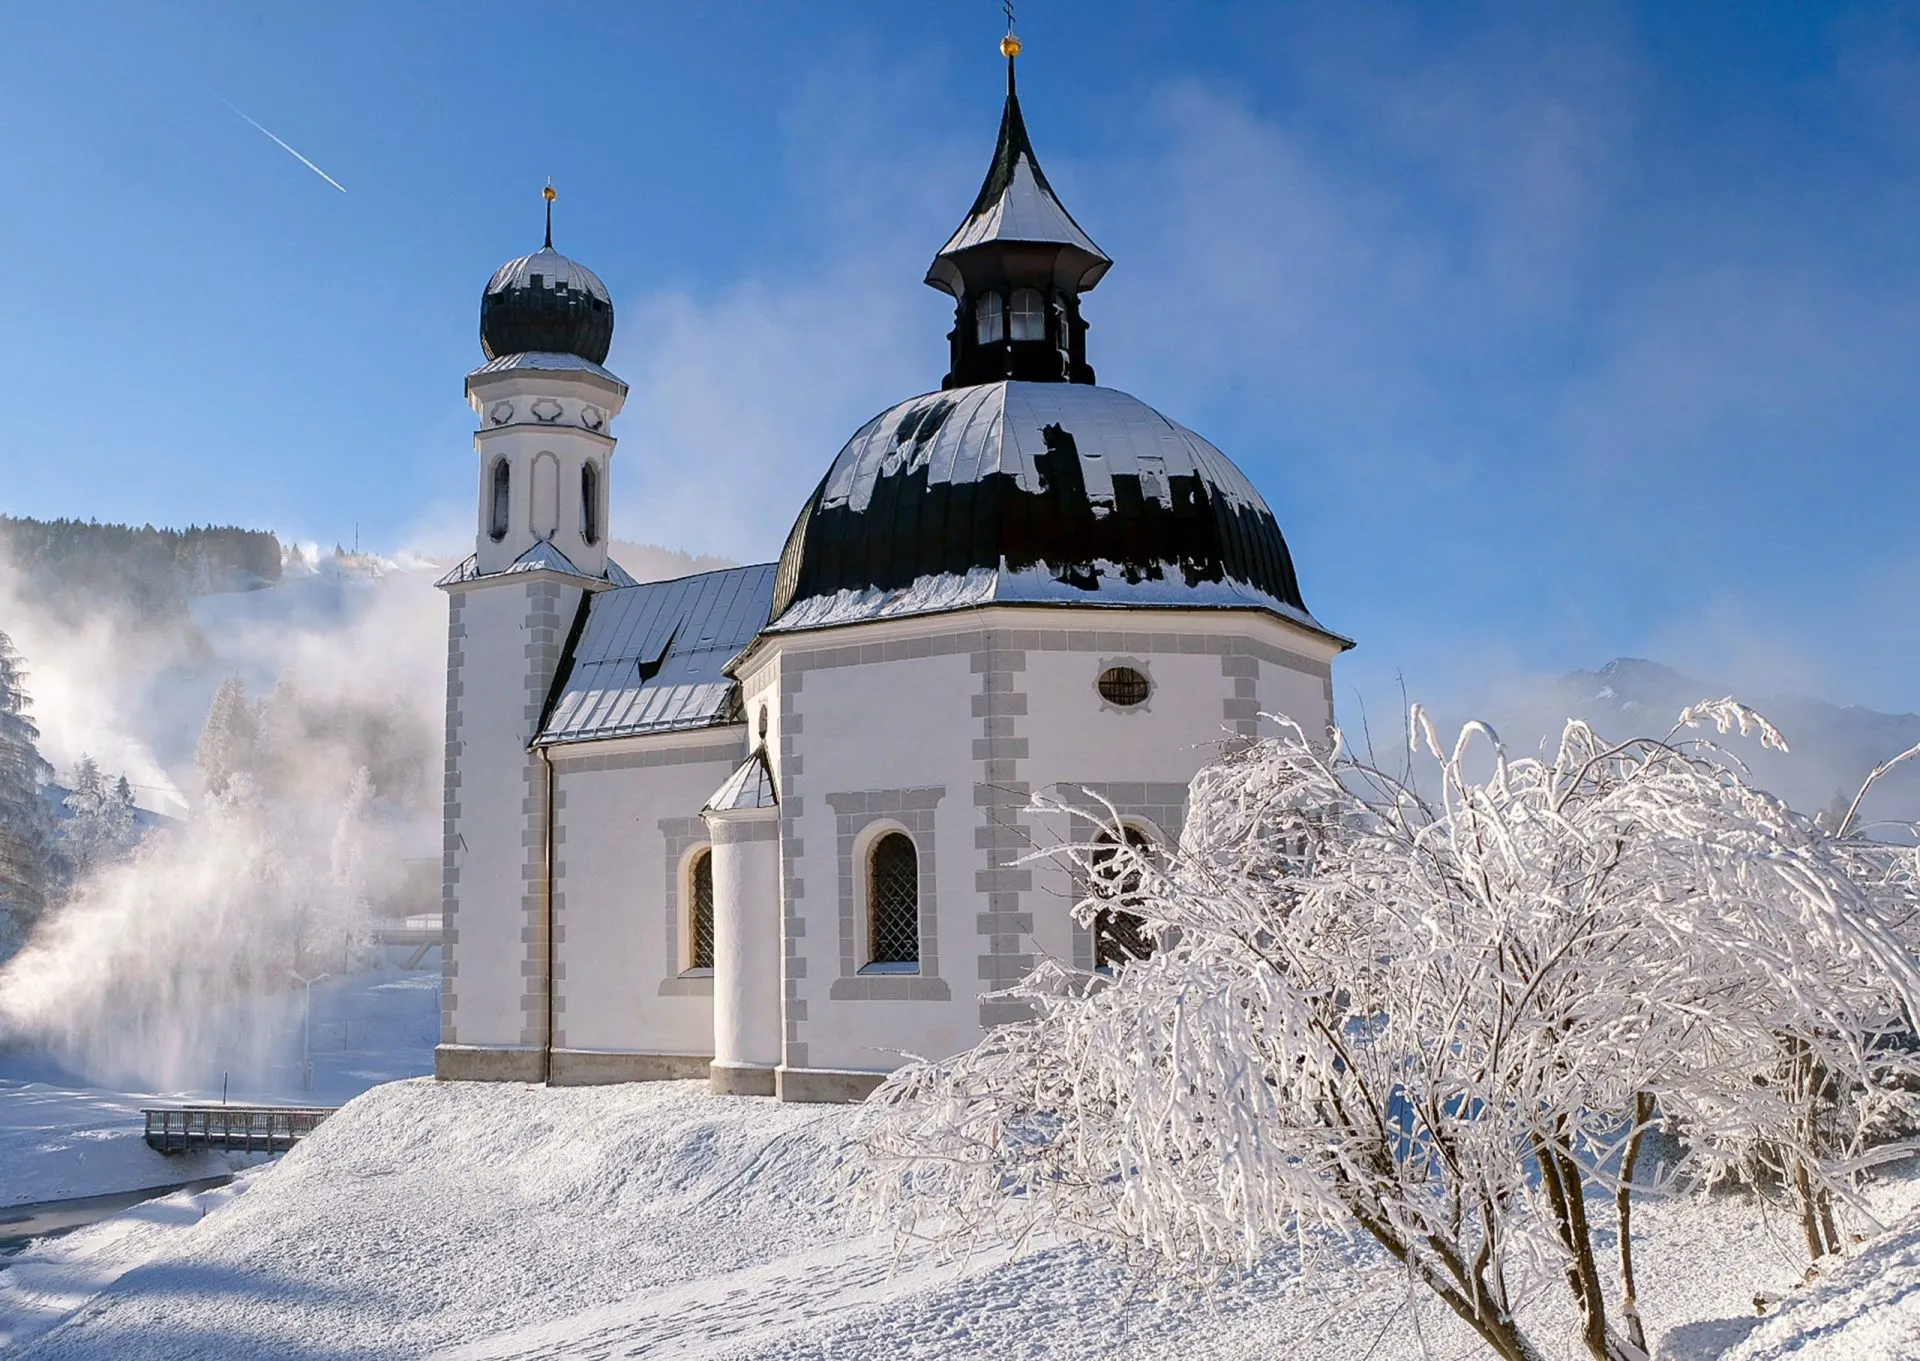 Church in Seefeld in winter